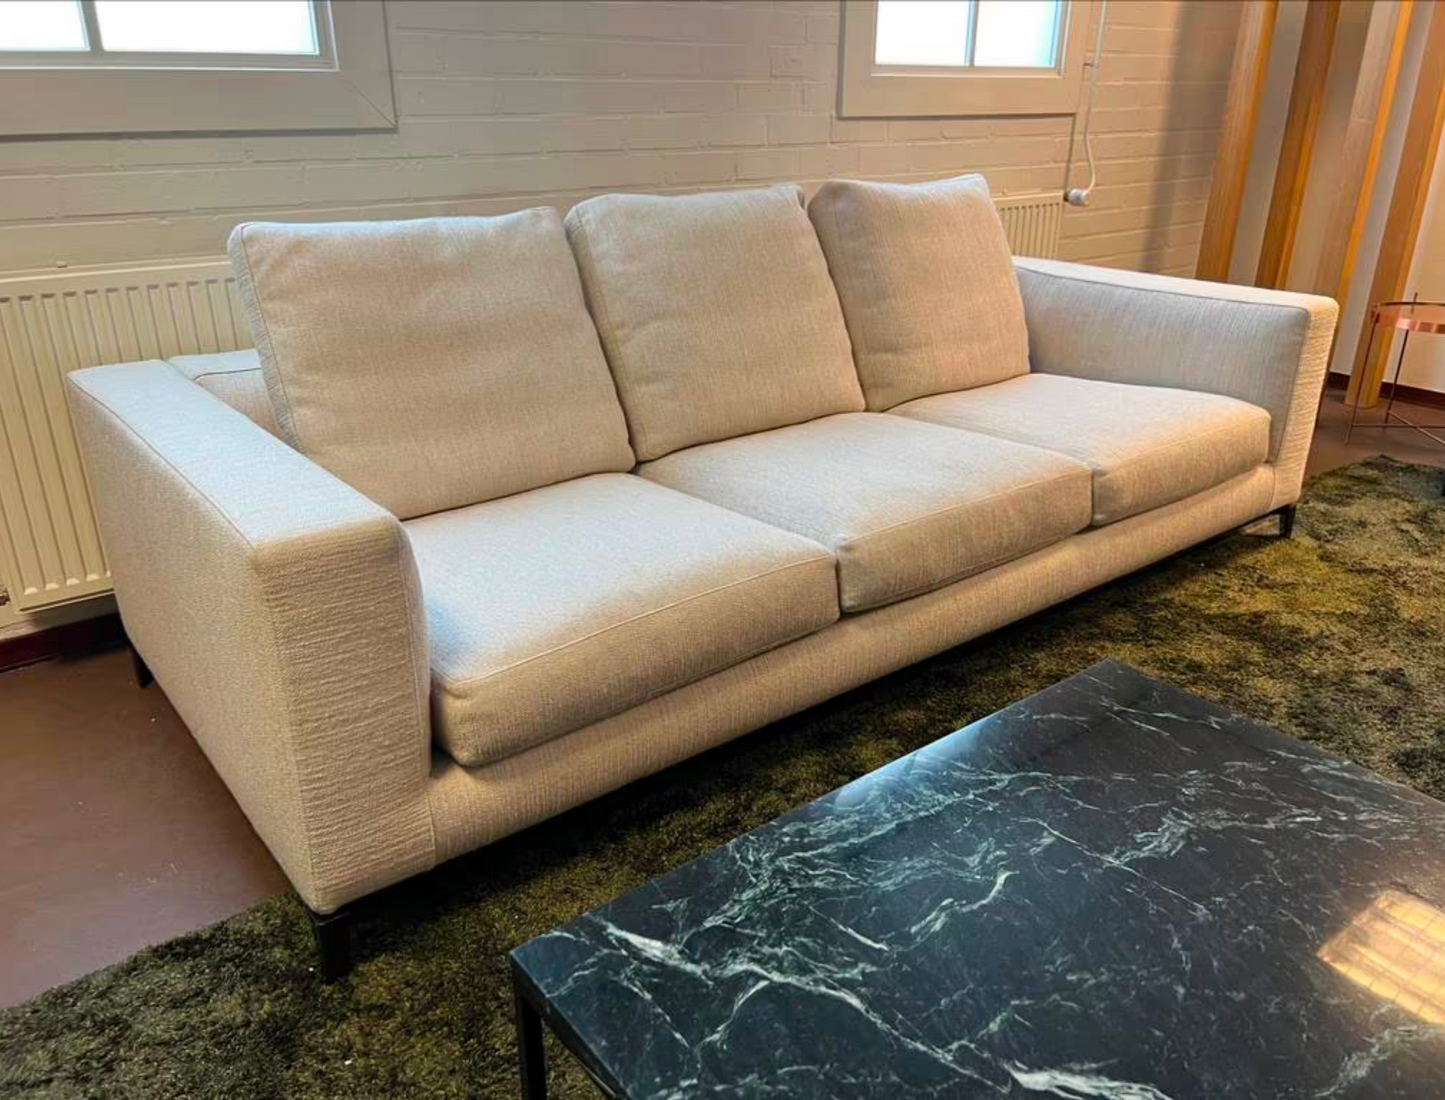 Zgan Minotti Andersen sofa 103x246cm in ecru beige fabric